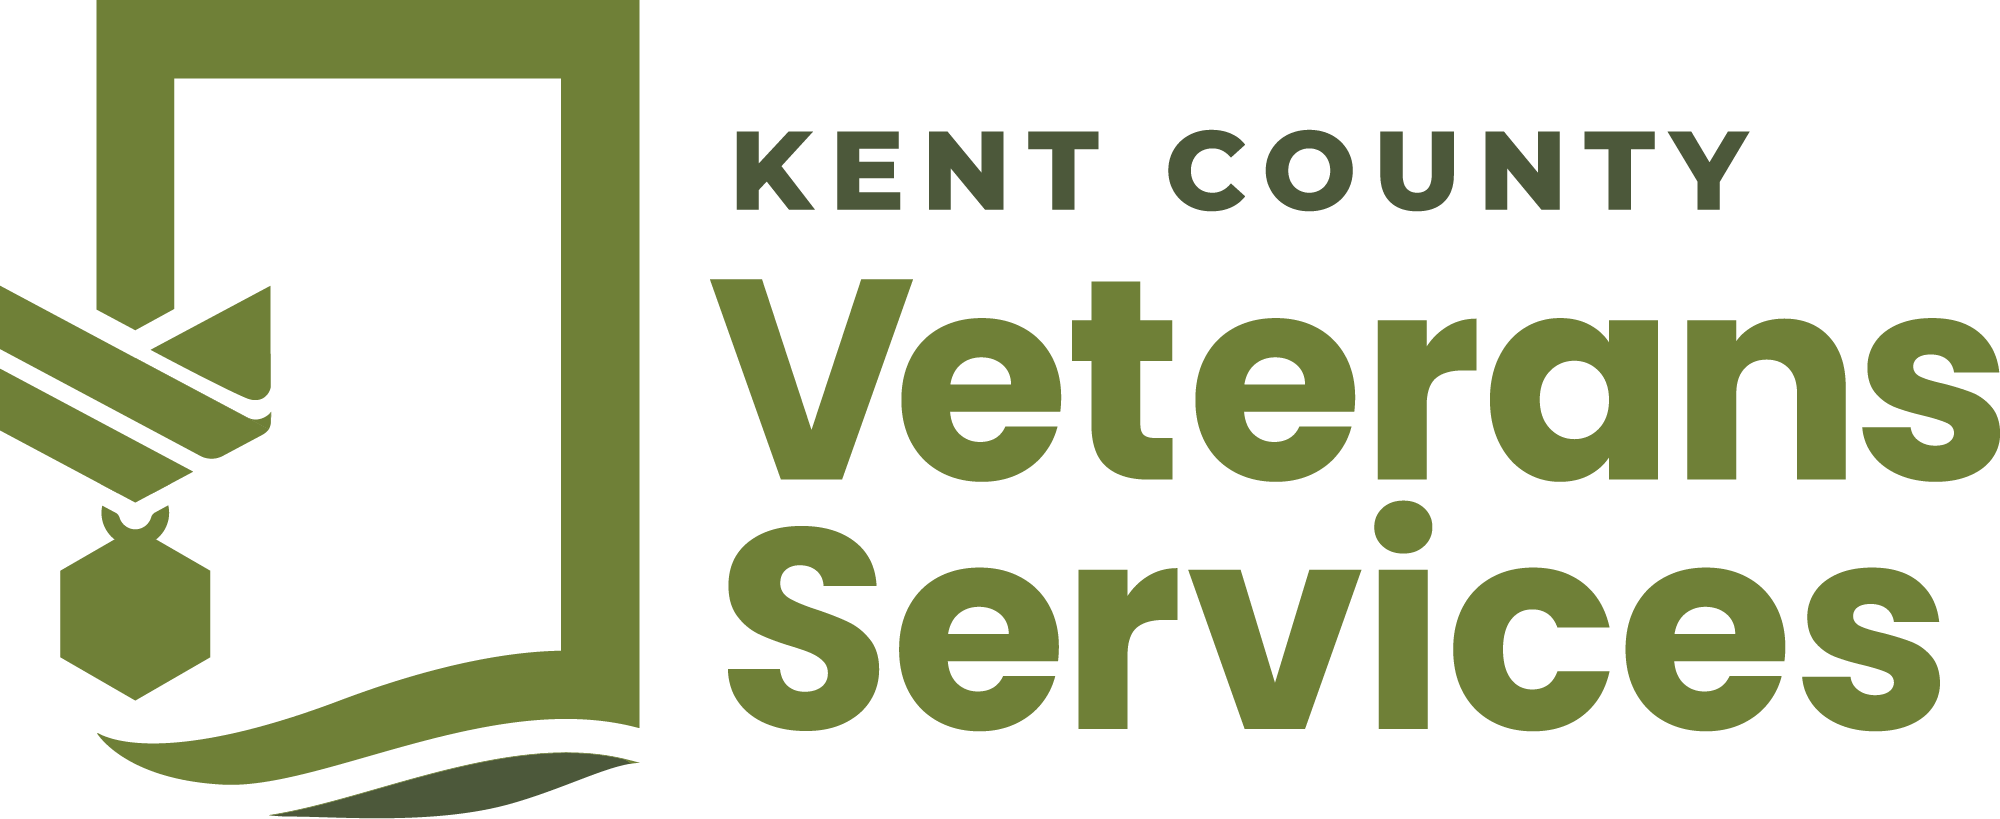 Kent County Veterans Services logo